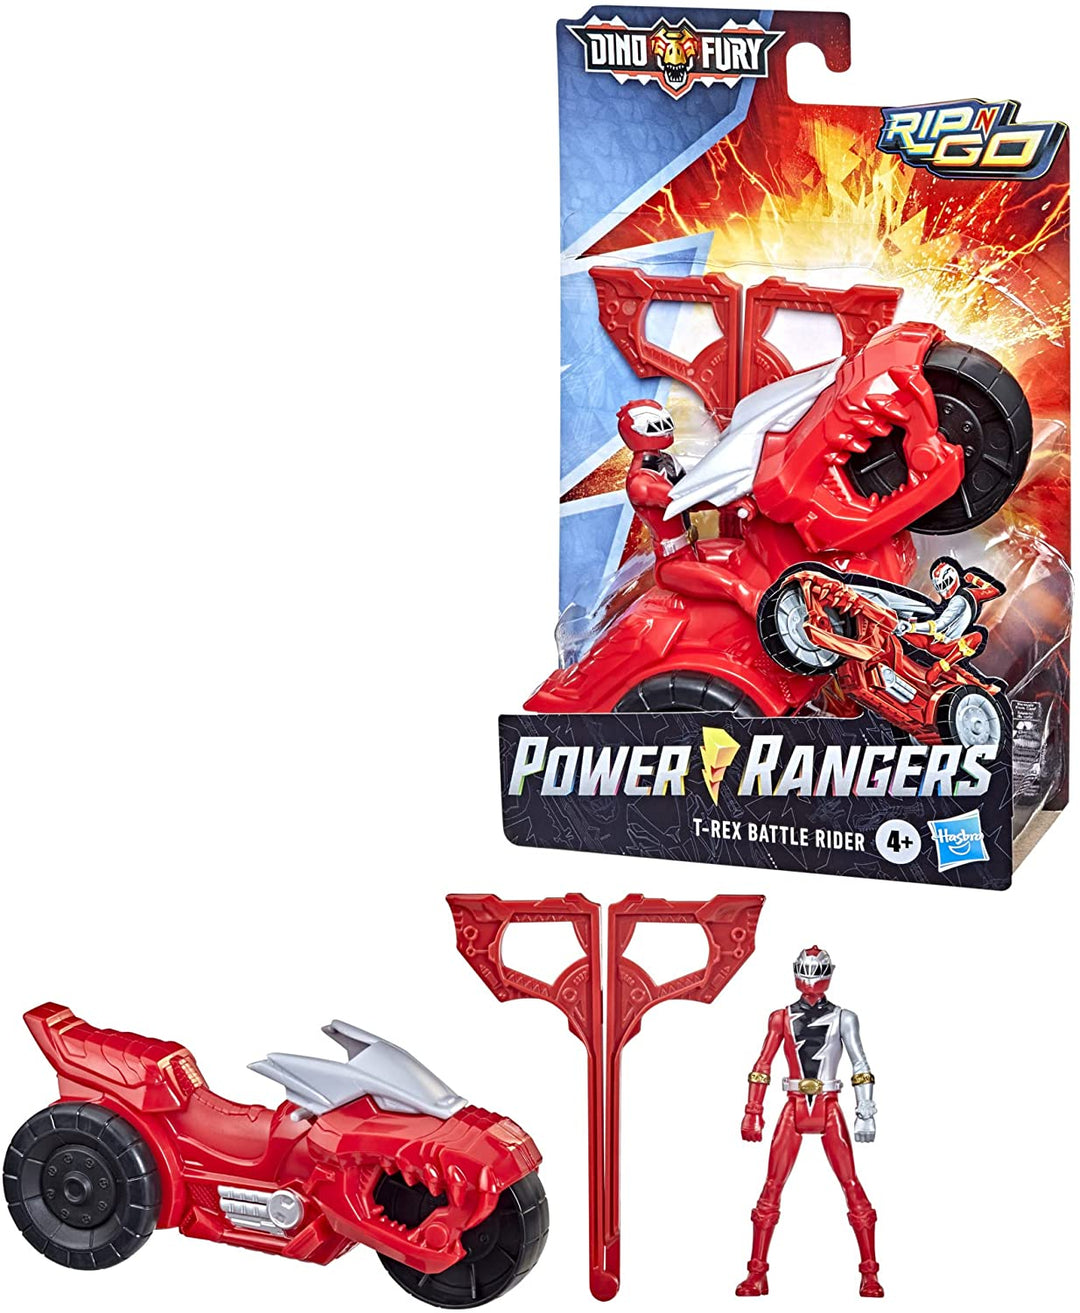 Power Rangers Dino Fury Rip N Go T-Rex Battle Rider and Dino Fury Red Ranger 15-